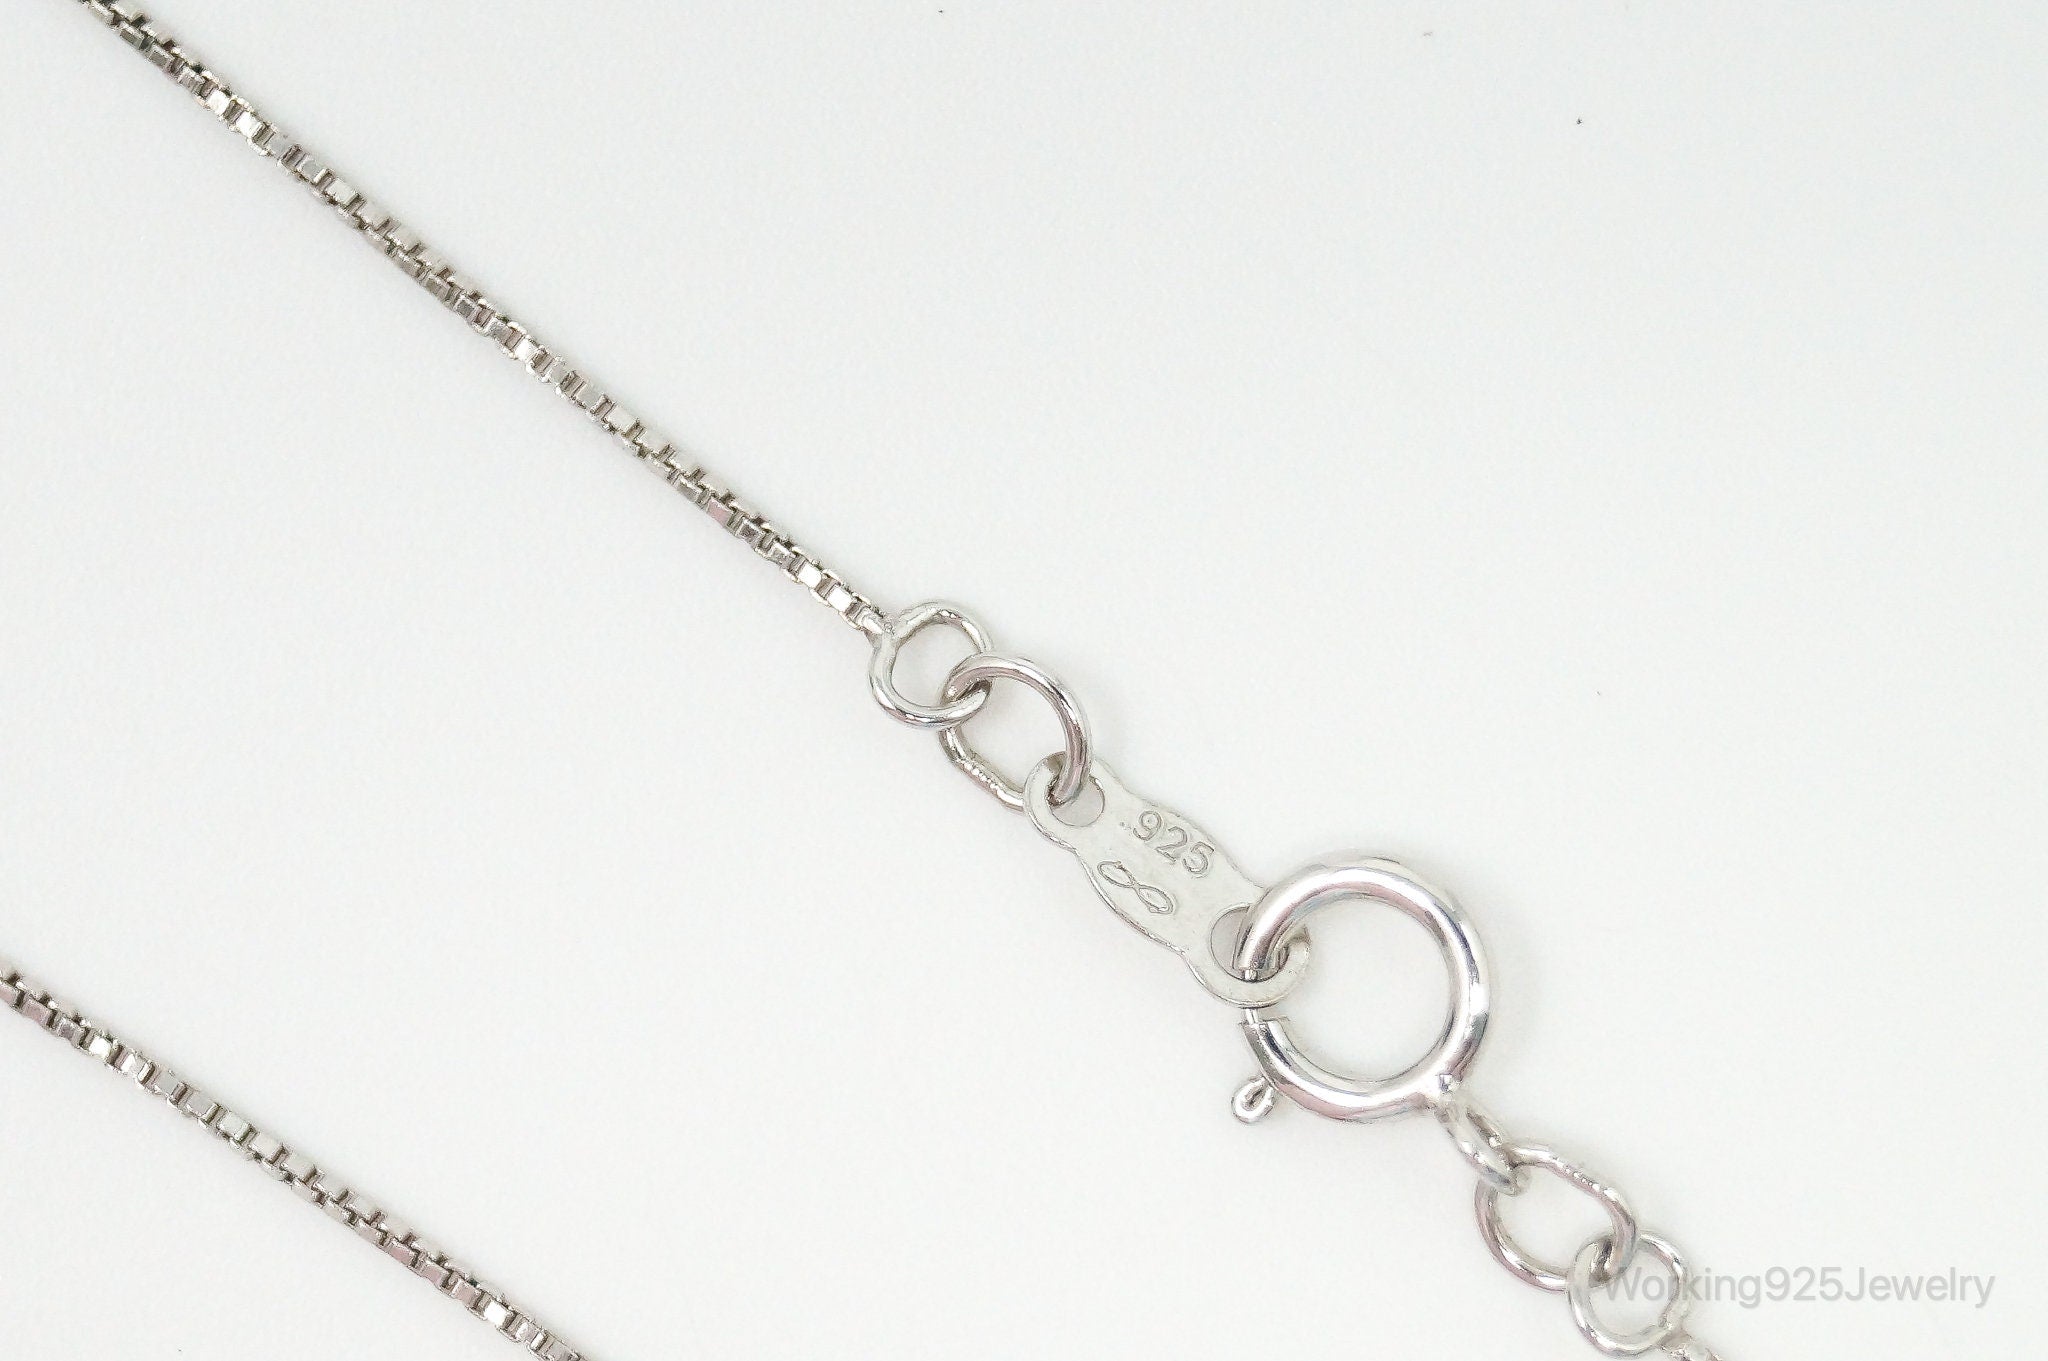 Designer Jane Seymour Blue Topaz Cubic Zirconia Sterling Silver Necklace